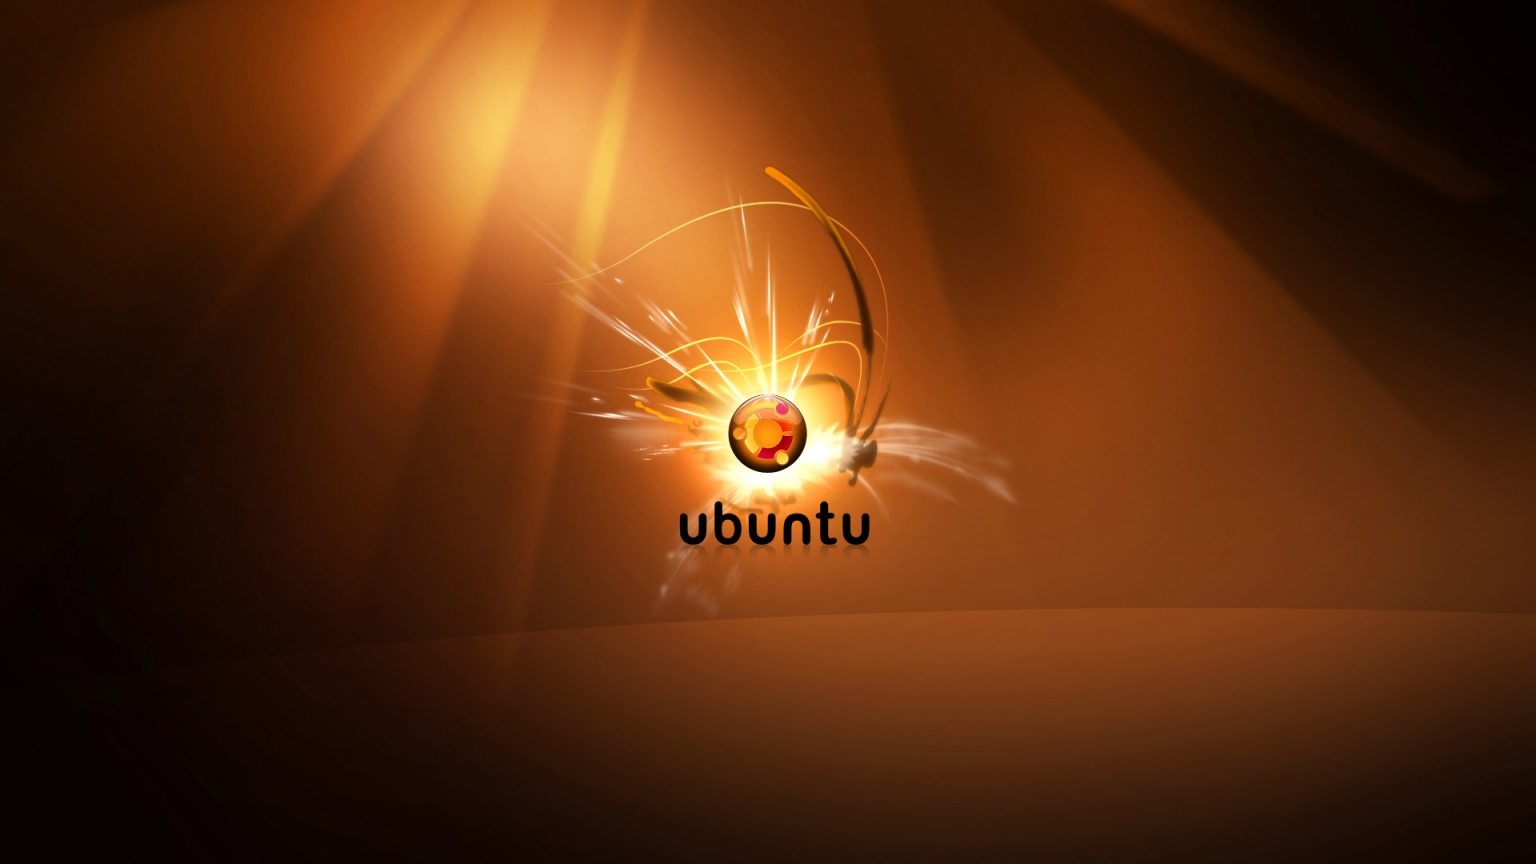 Creative Ubuntu Design for 1536 x 864 HDTV resolution